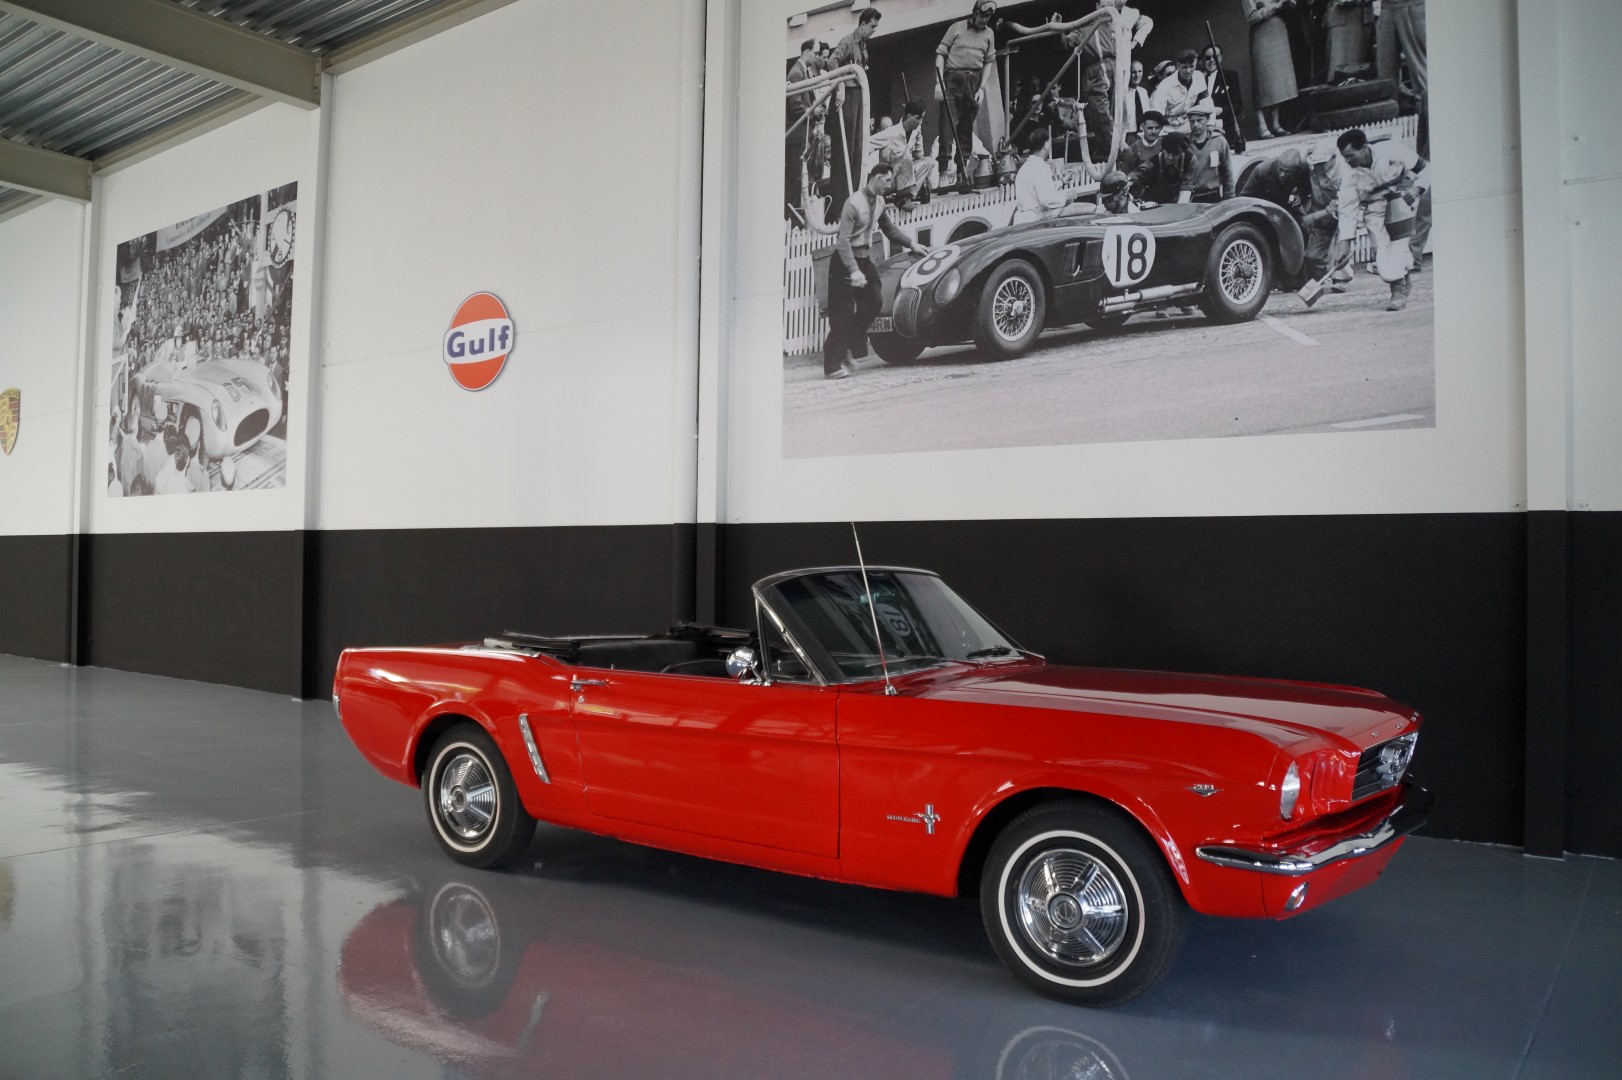 Ford Mustang  kaufen bei Legendary Classics 